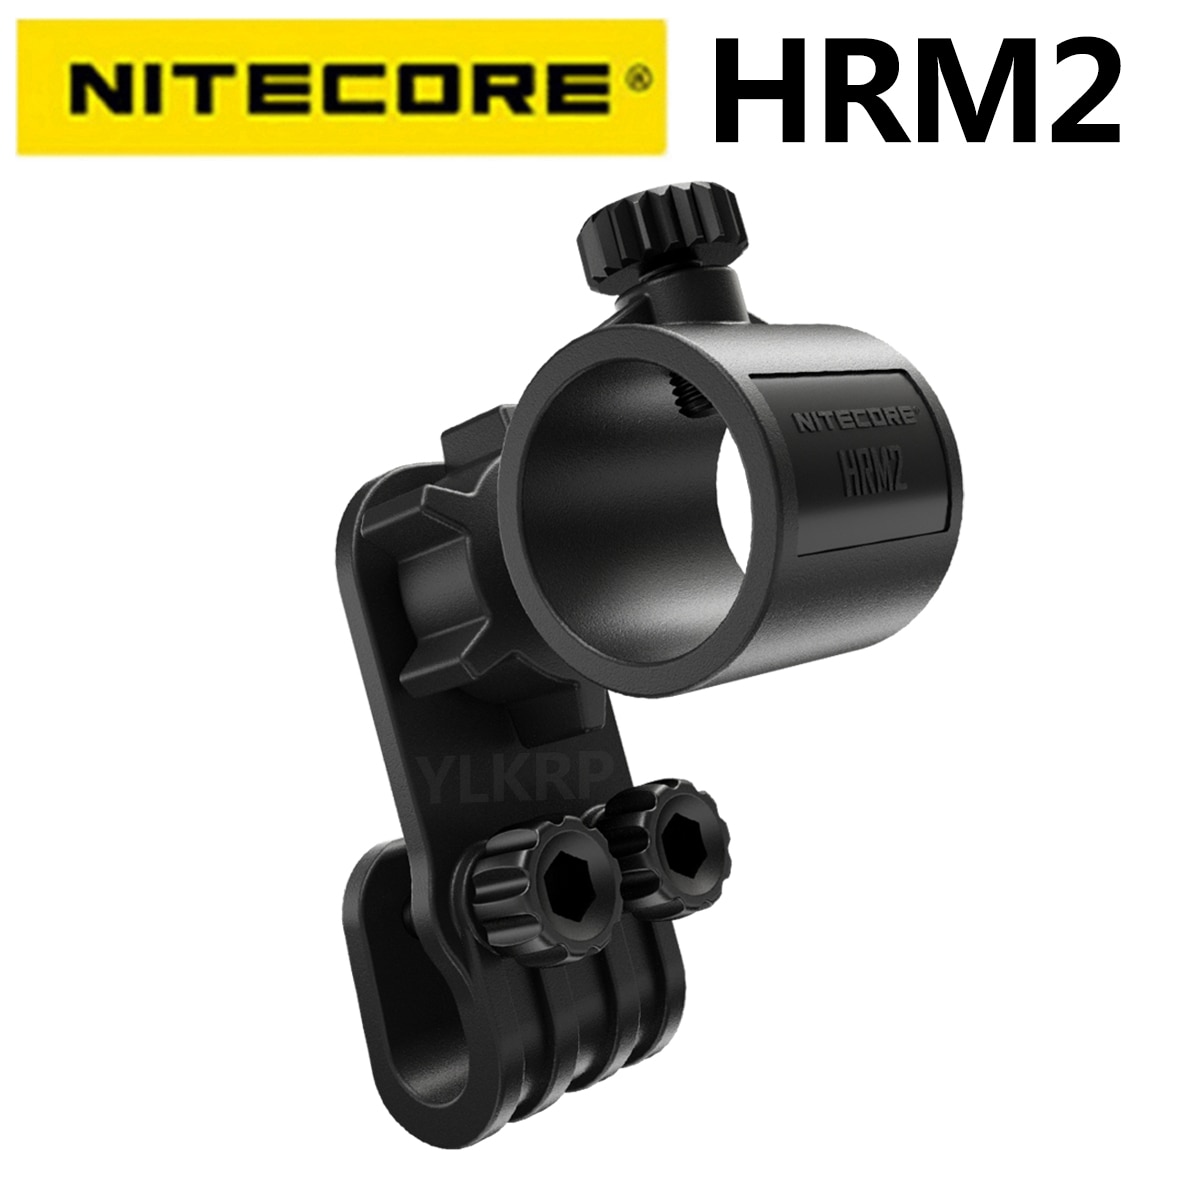 NITECORE HRM2 는 관세 작업, 소방 및 구조를 위해 특별히 설계되었으며 폭동 방지, 소방과 함께 사용할 수 있습니다.